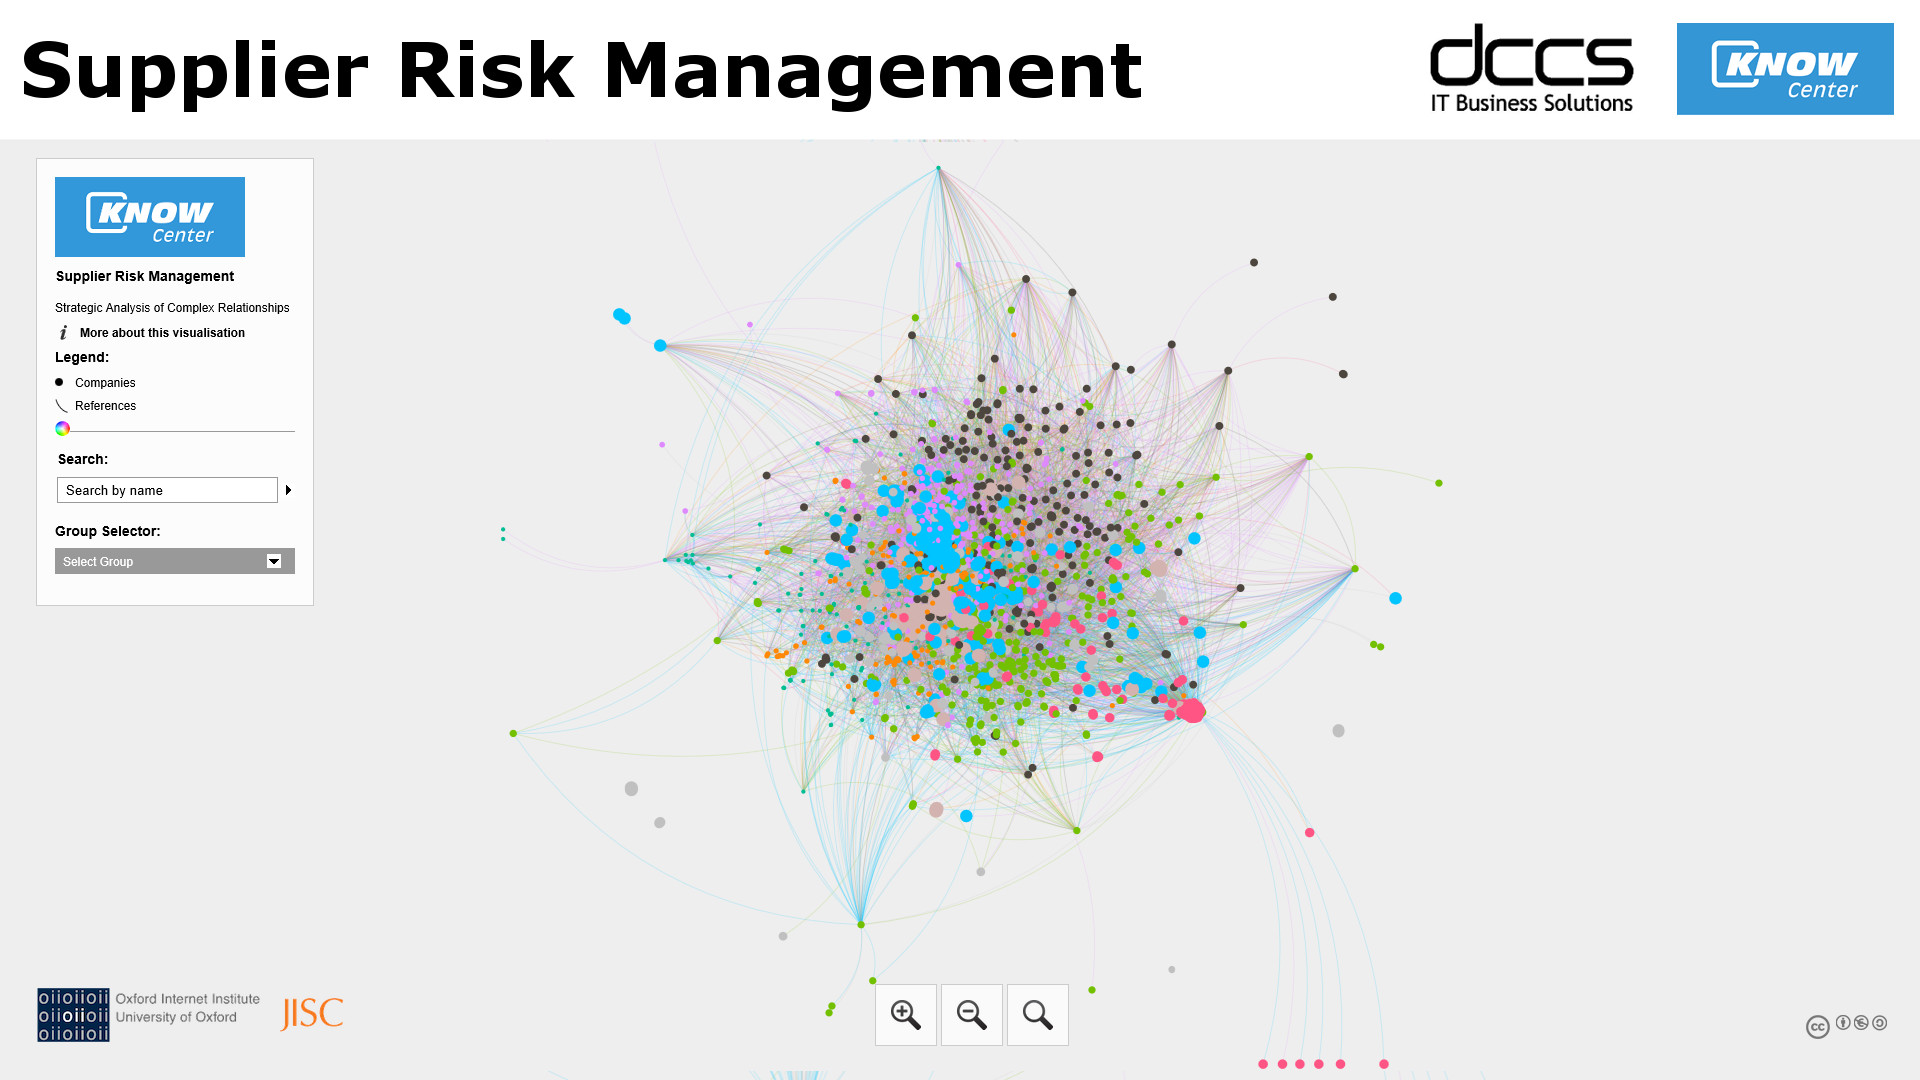 Supplier Risk Management – Strategic Analysis of Complex Relationships